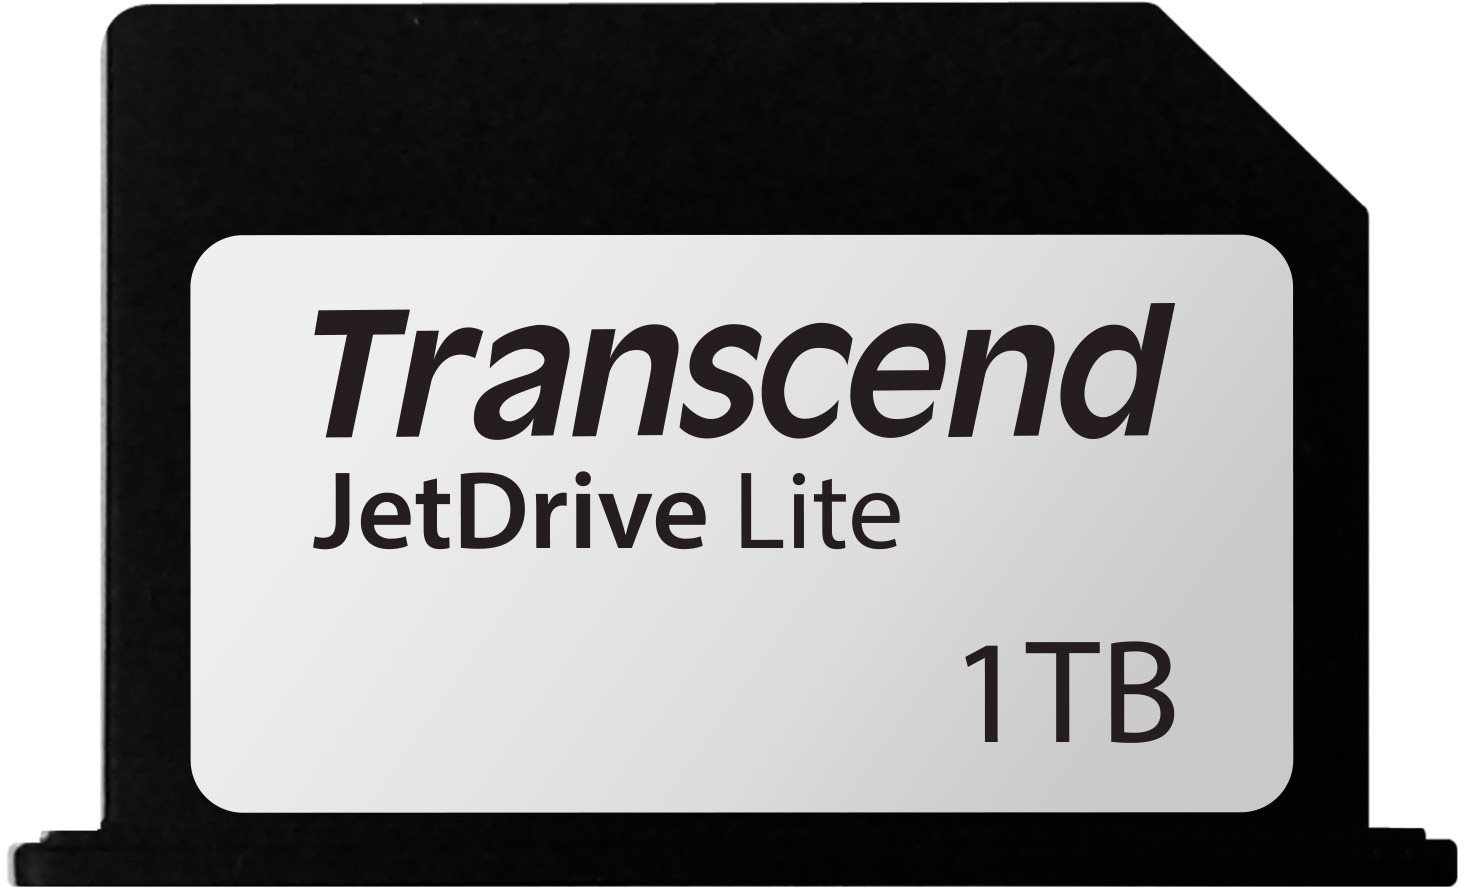 Memóriakártya Transcend JetDrive Lite 330 1TB